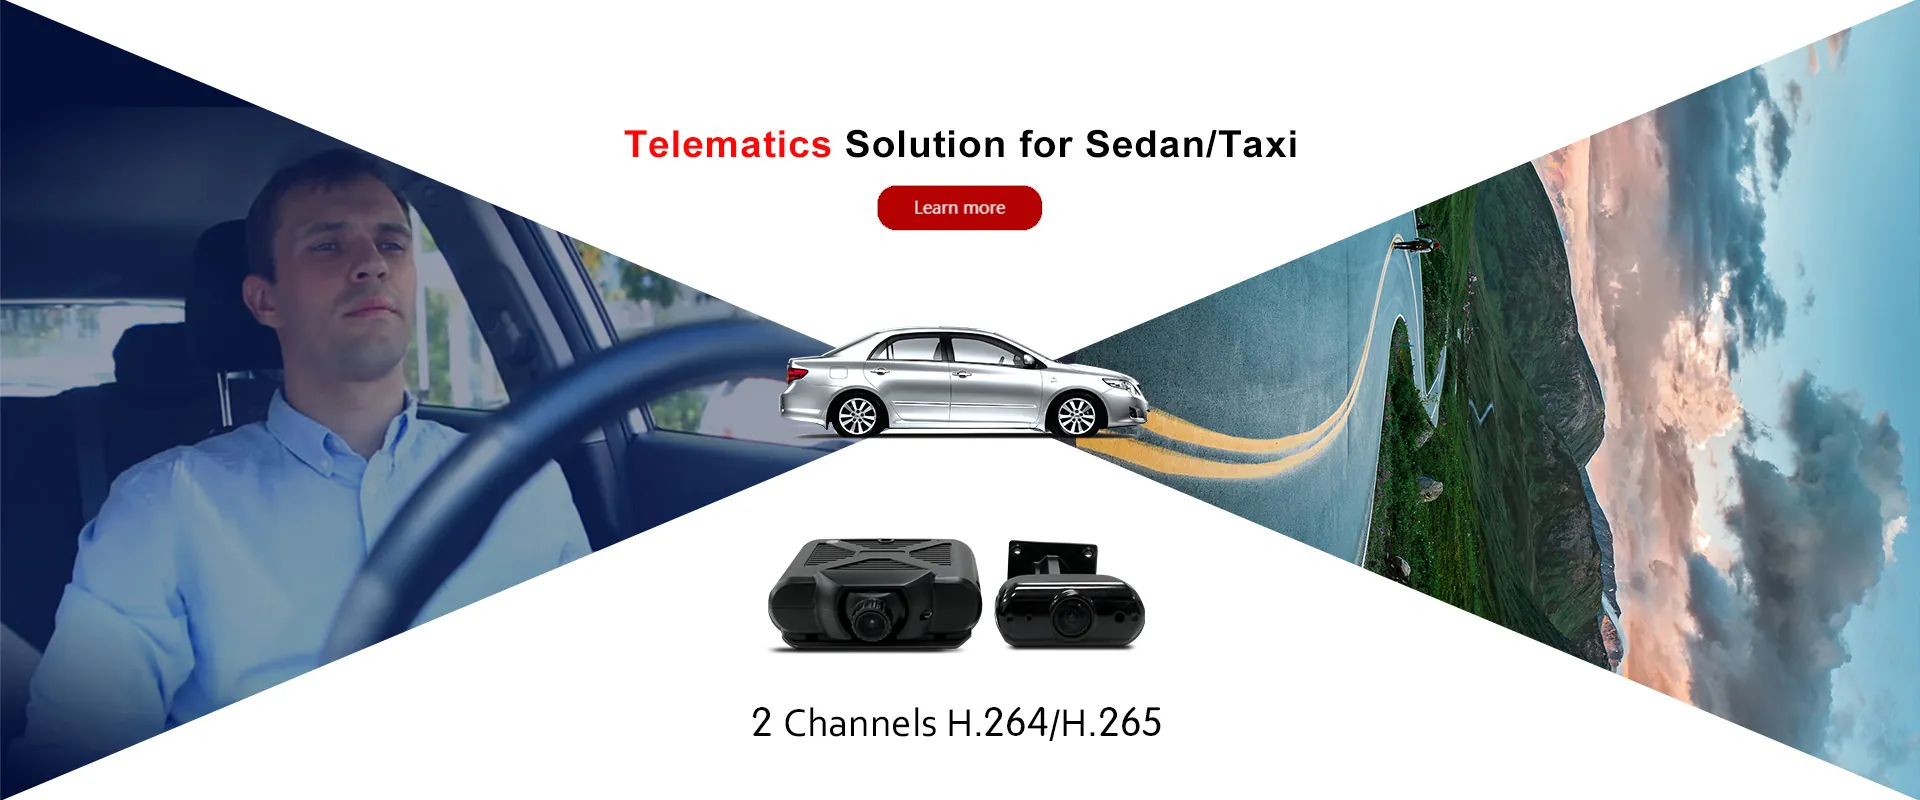 Telematics Solution for Sedan Taxi